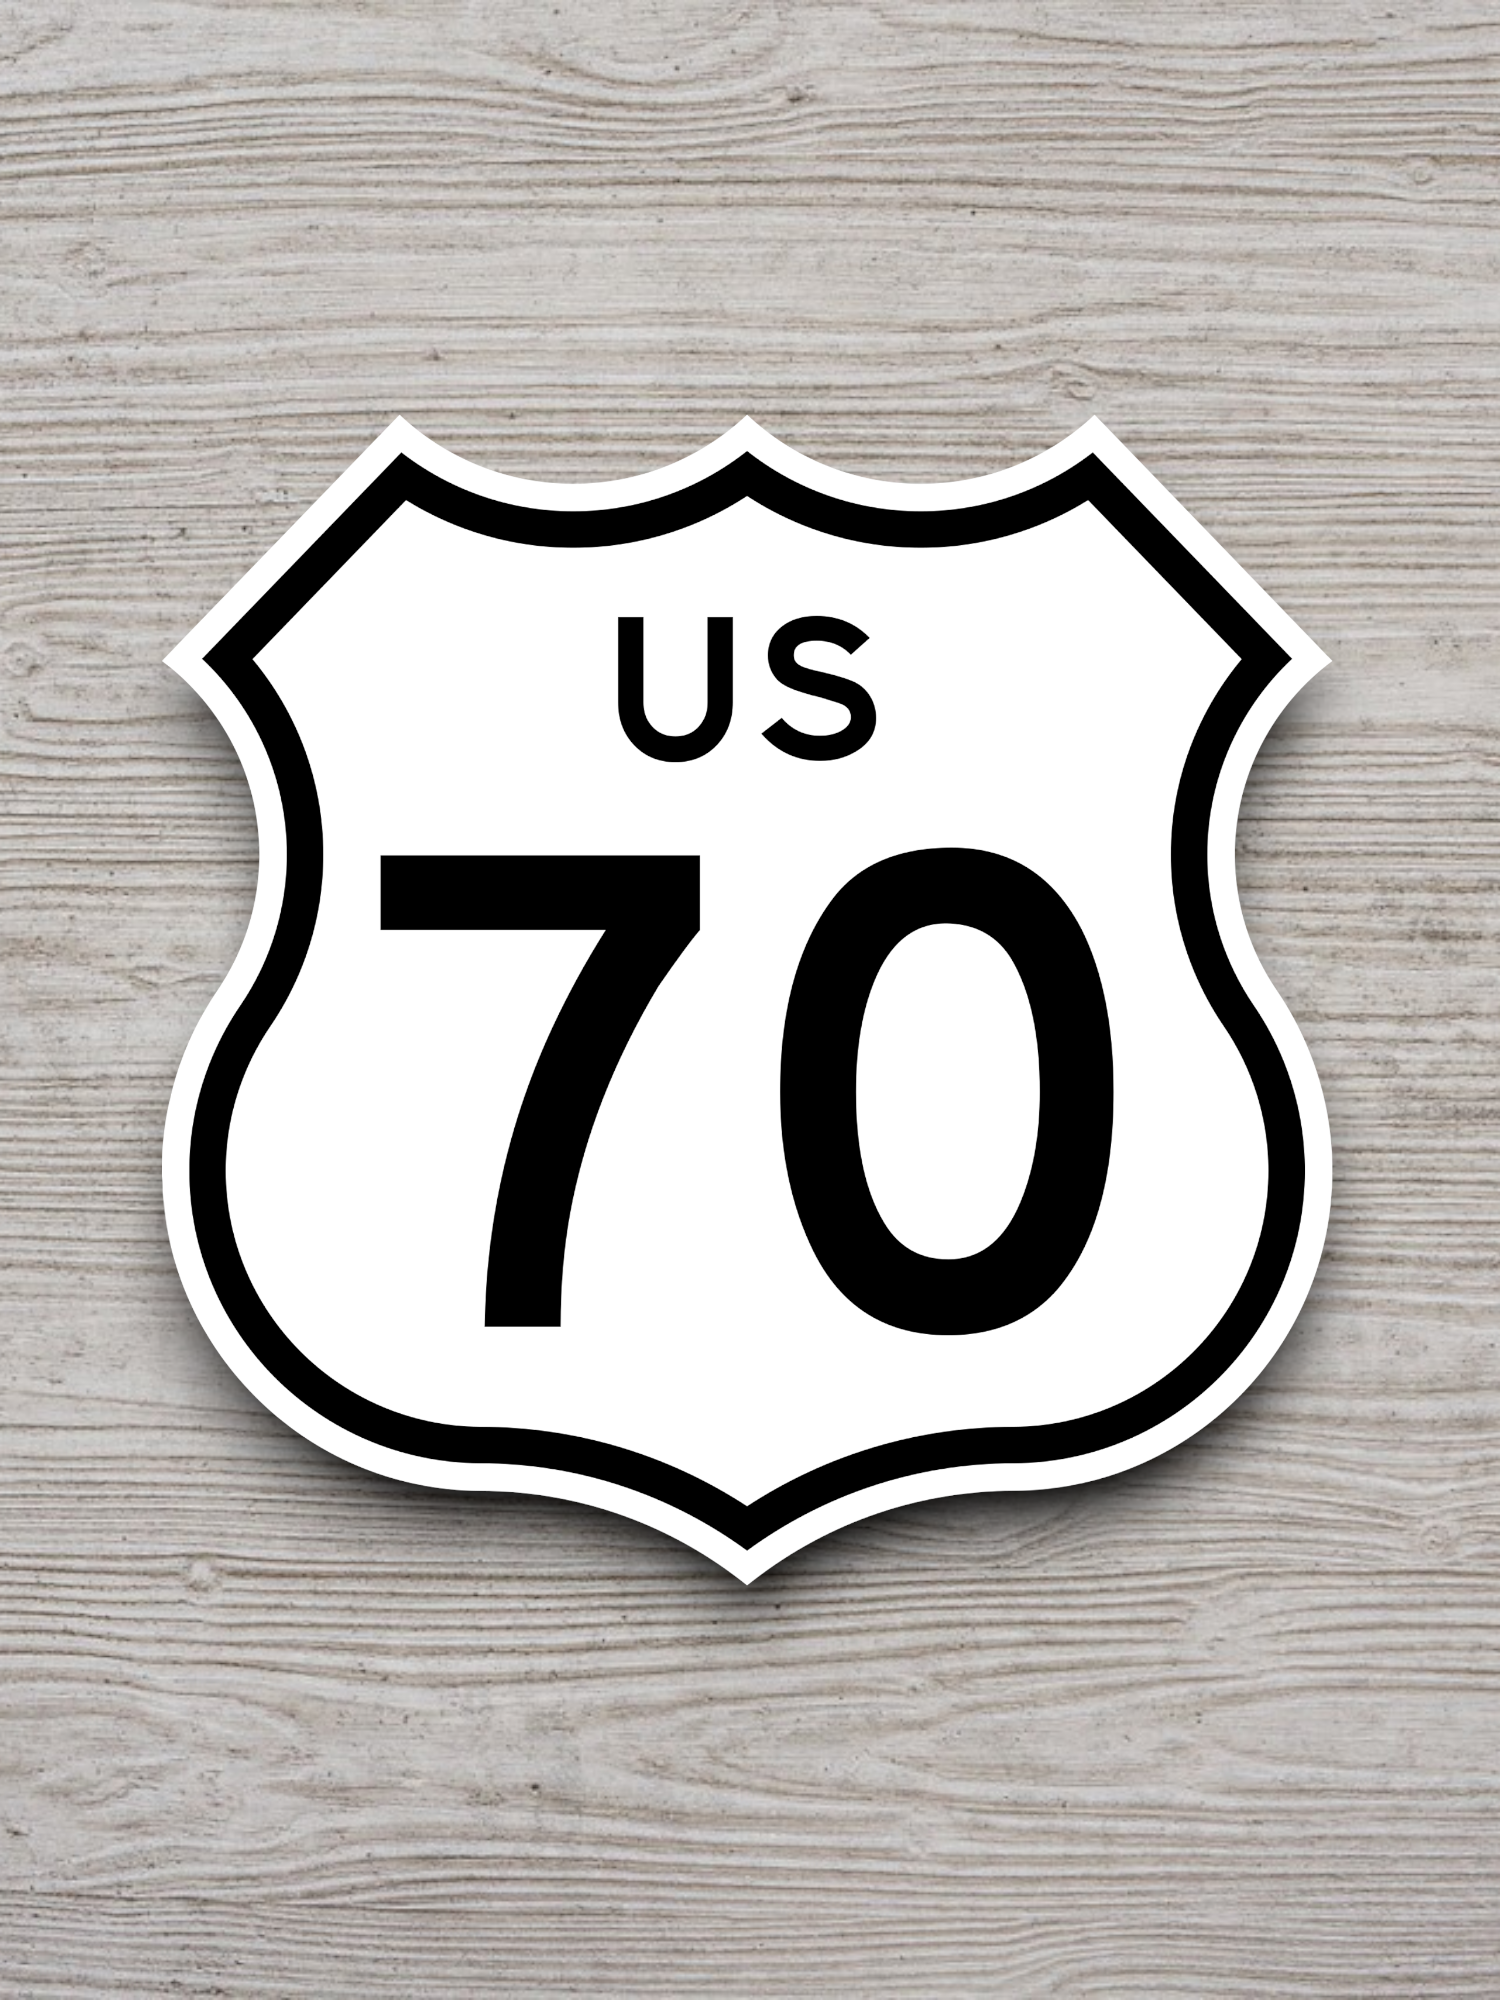 U.S. Route 70 Road Sign Sticker